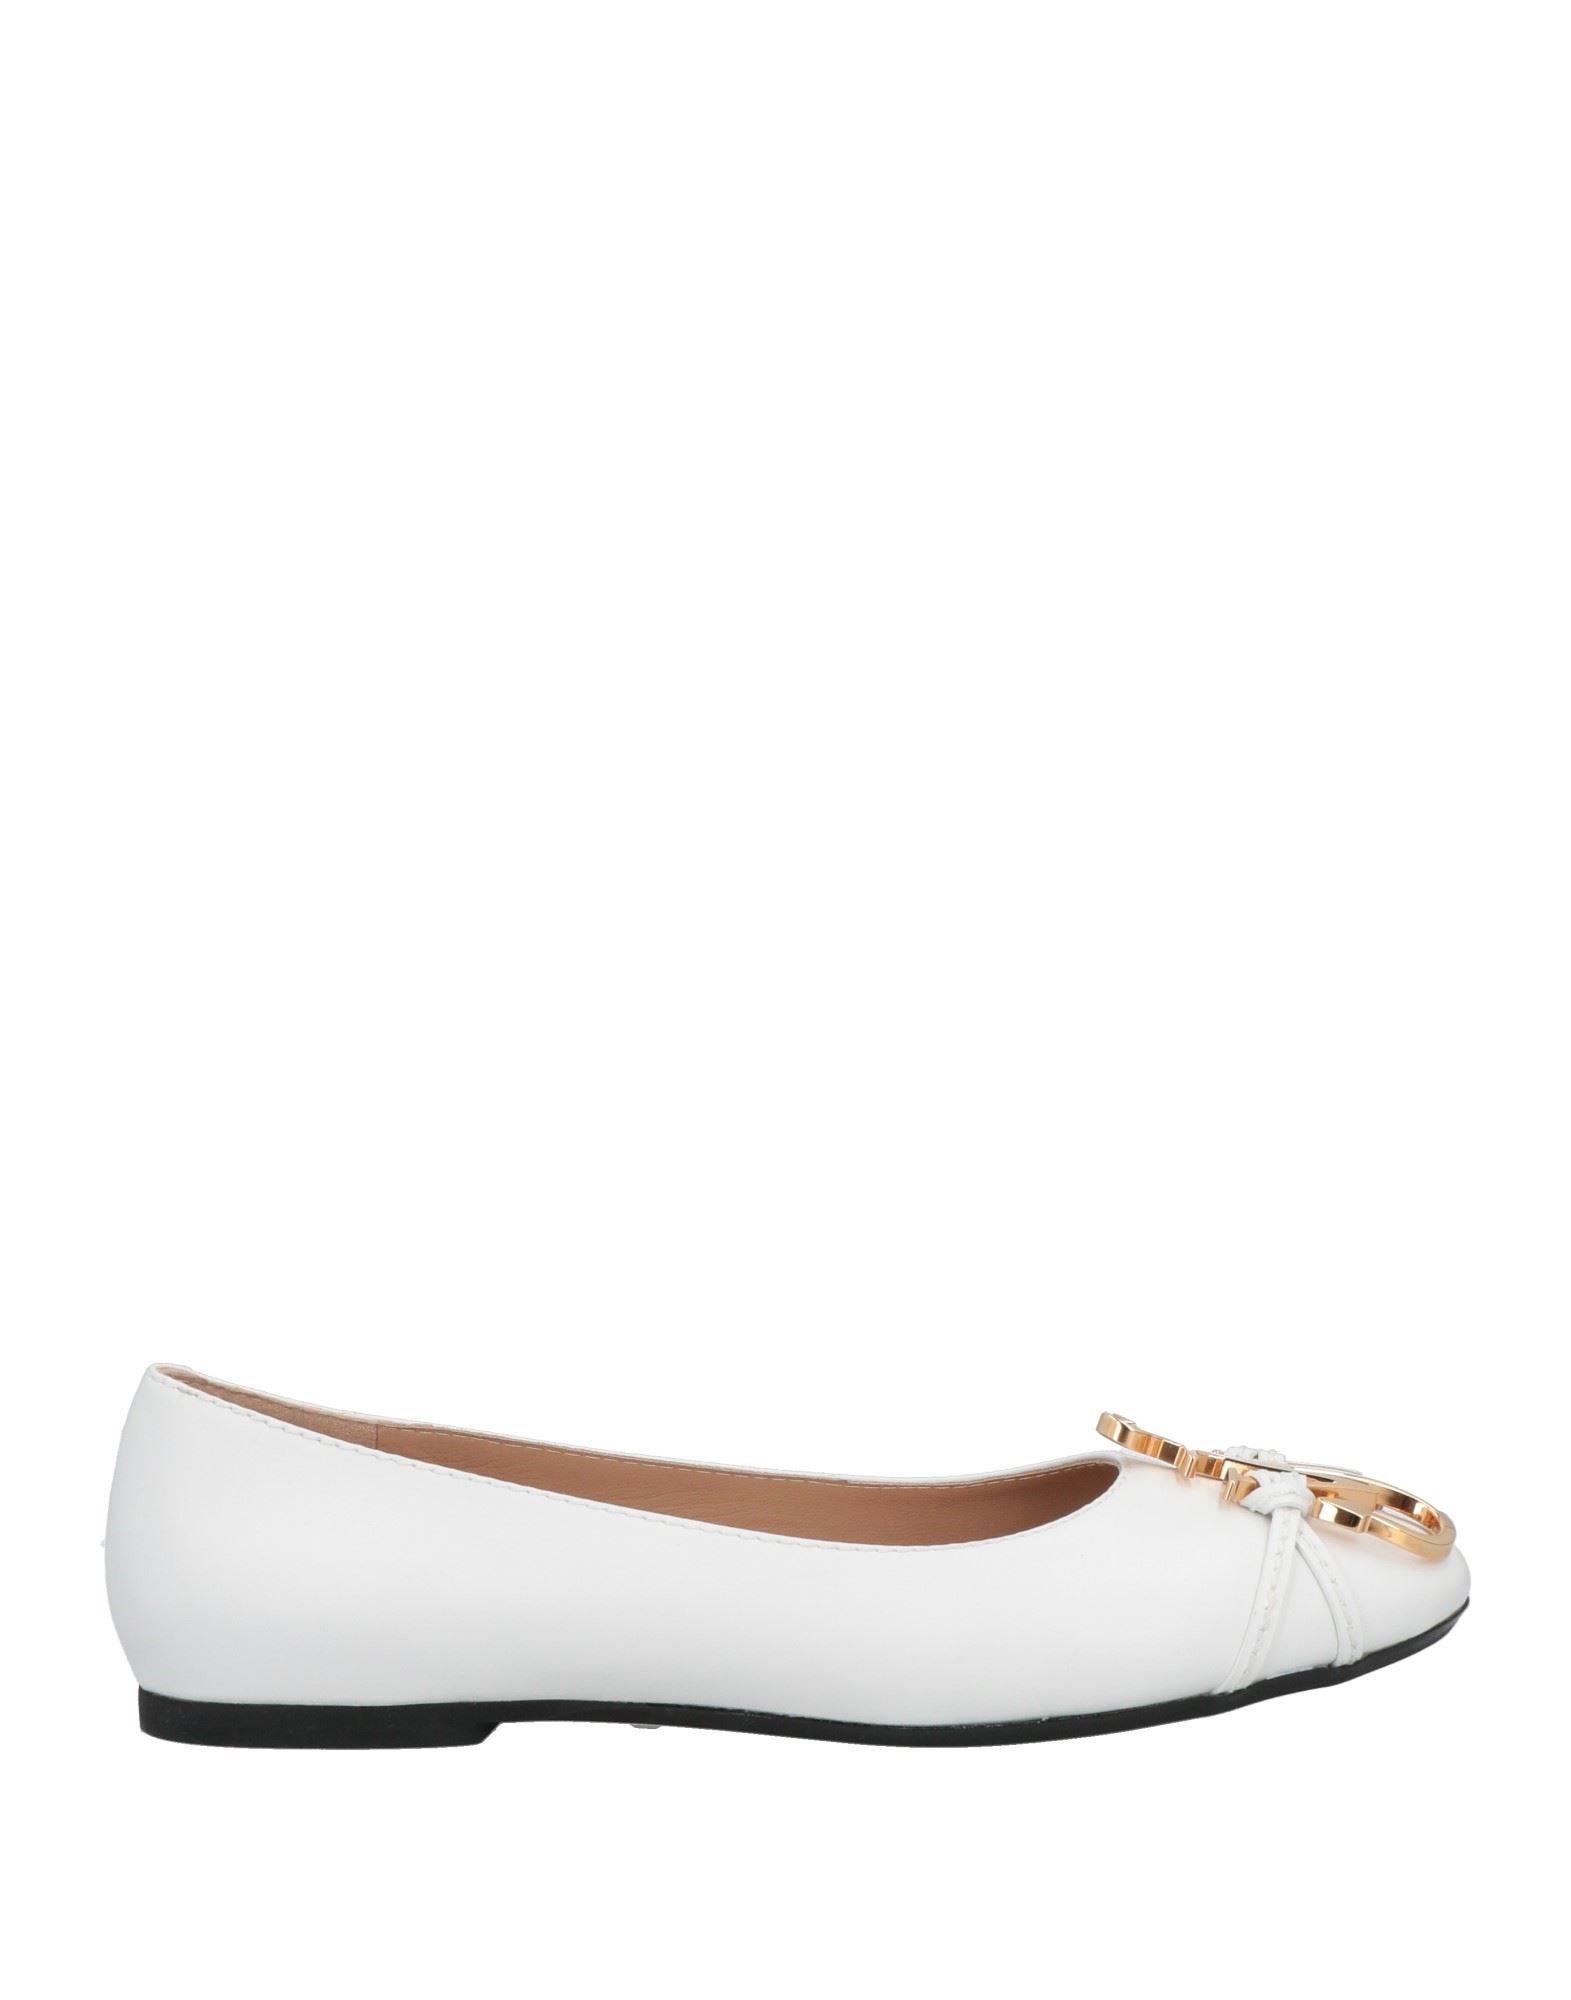 Shop Jw Anderson Woman Ballet Flats White Size 7.5 Soft Leather